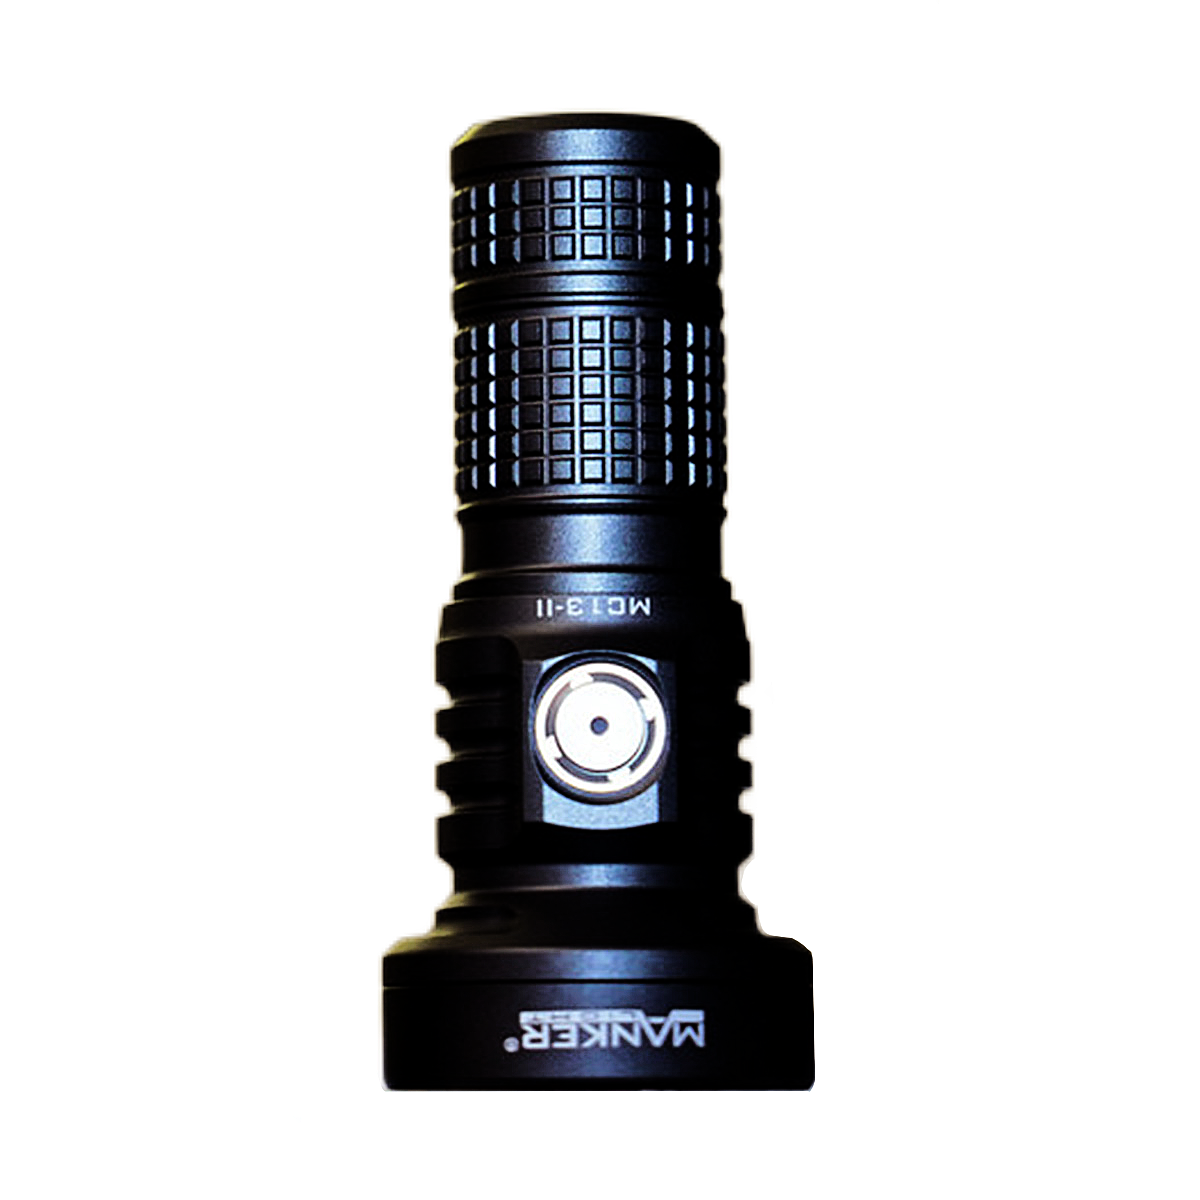 Mankerlight MC13 II SFT40 Edc Flashlight Dual Use 18650 and 18350 Battery PVD Sand PVD Black